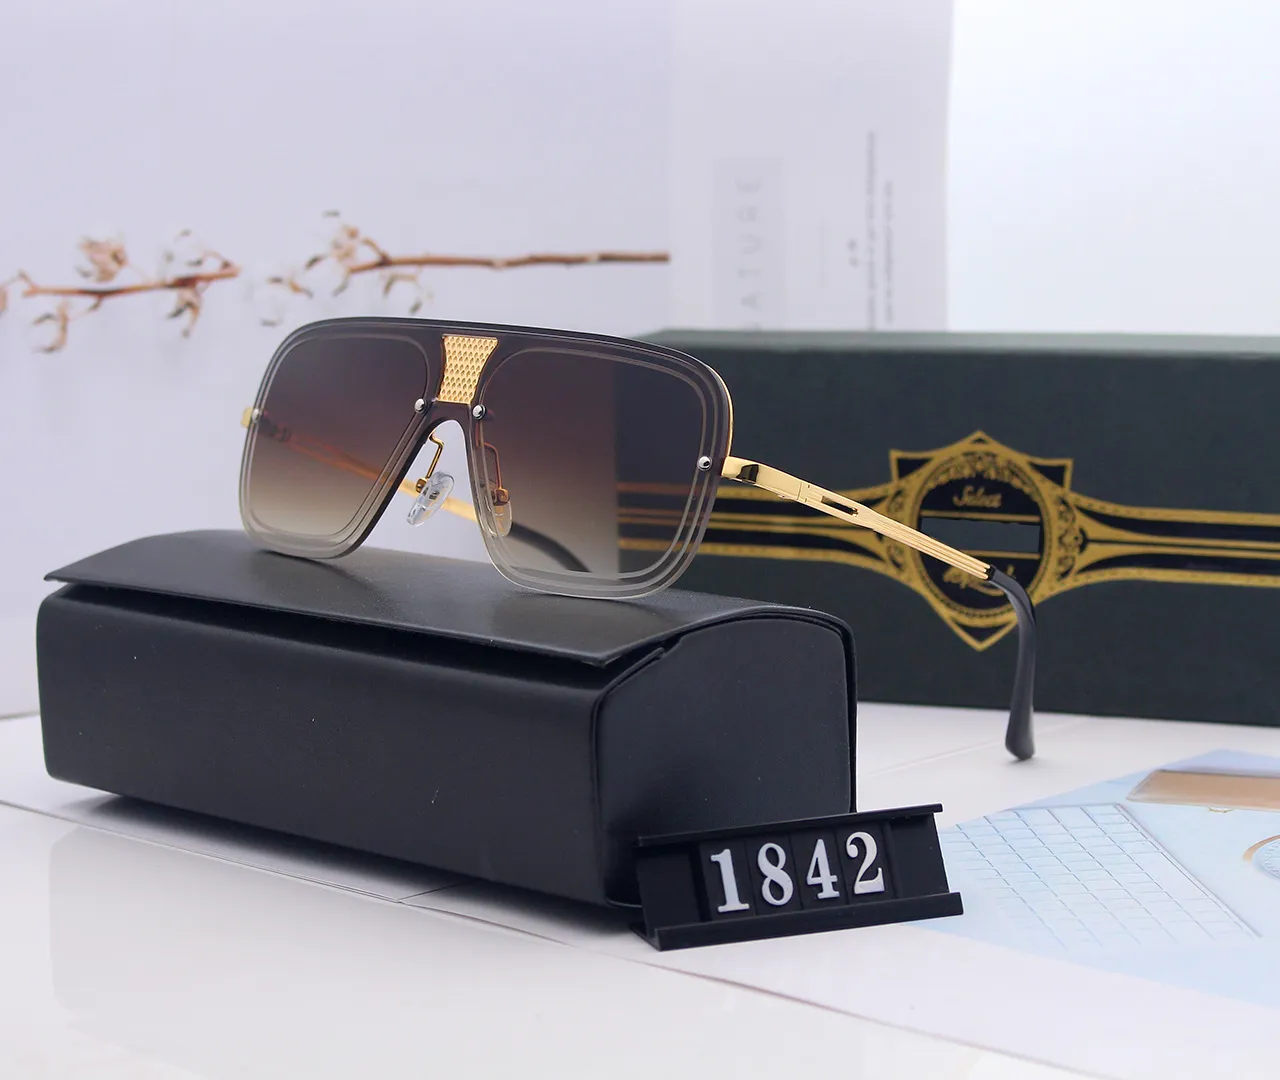 1842 Gafas de Sol Moda MenwomenサングラスサングラスUV400 ProtectionTop Calidad with Box Case313n